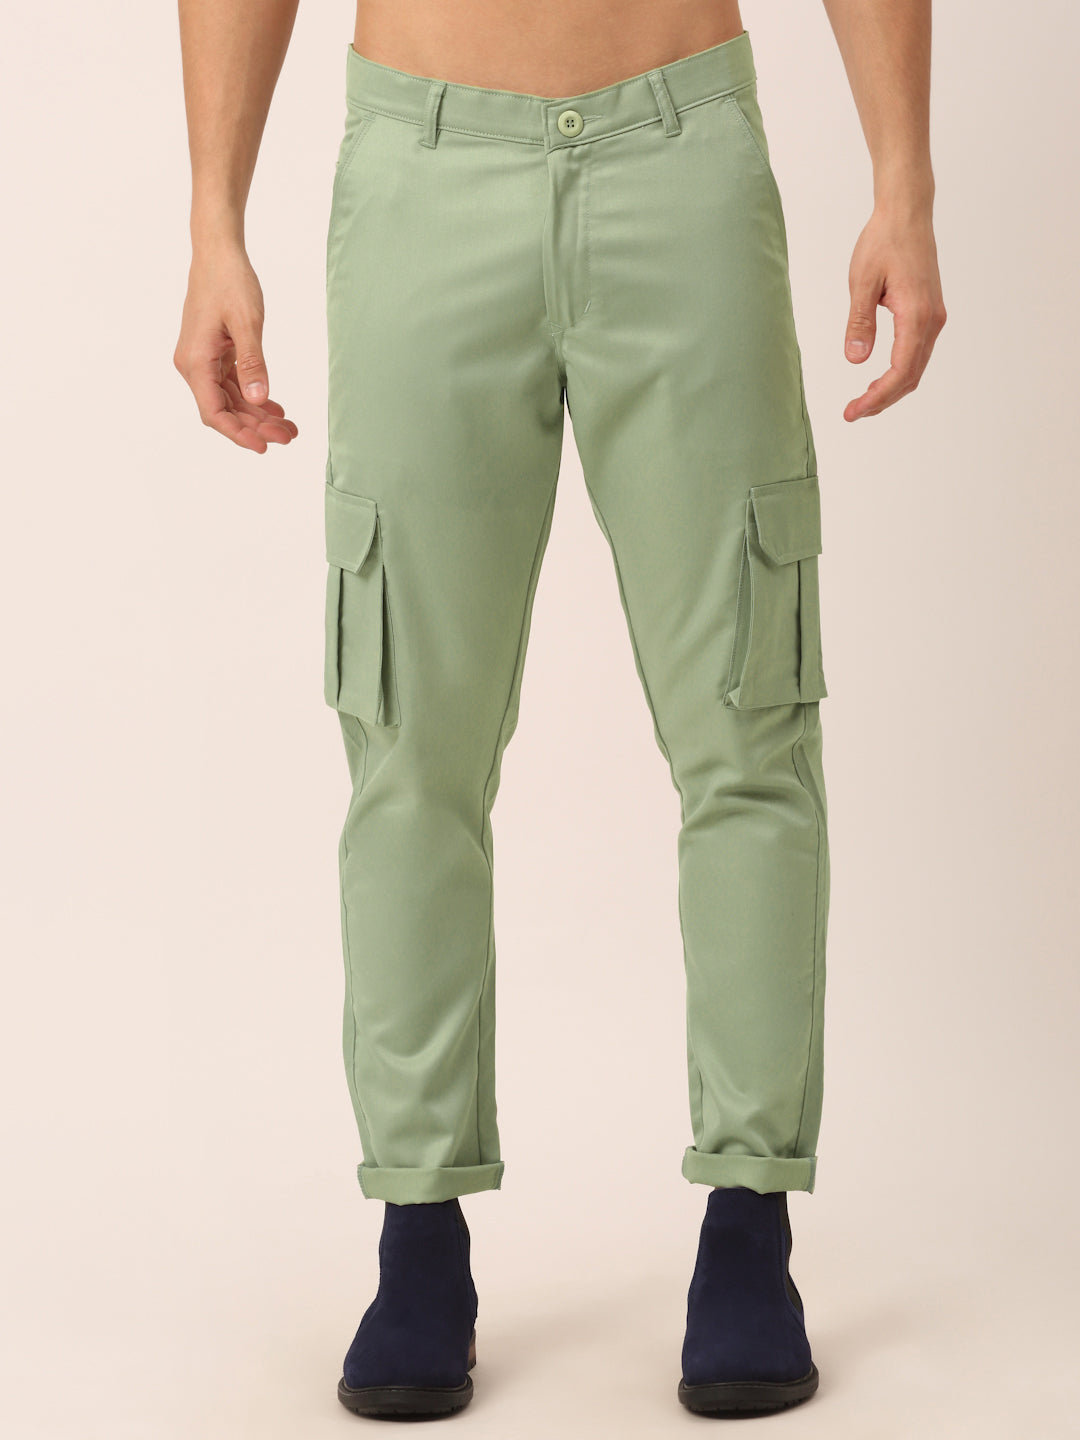 Hvyesh Cargo Pants for Women Ladies Street Style Fashion Design Sense Multi  Pocket Overalls Drawstring Elastic Low Waist Sports Pants - Walmart.com